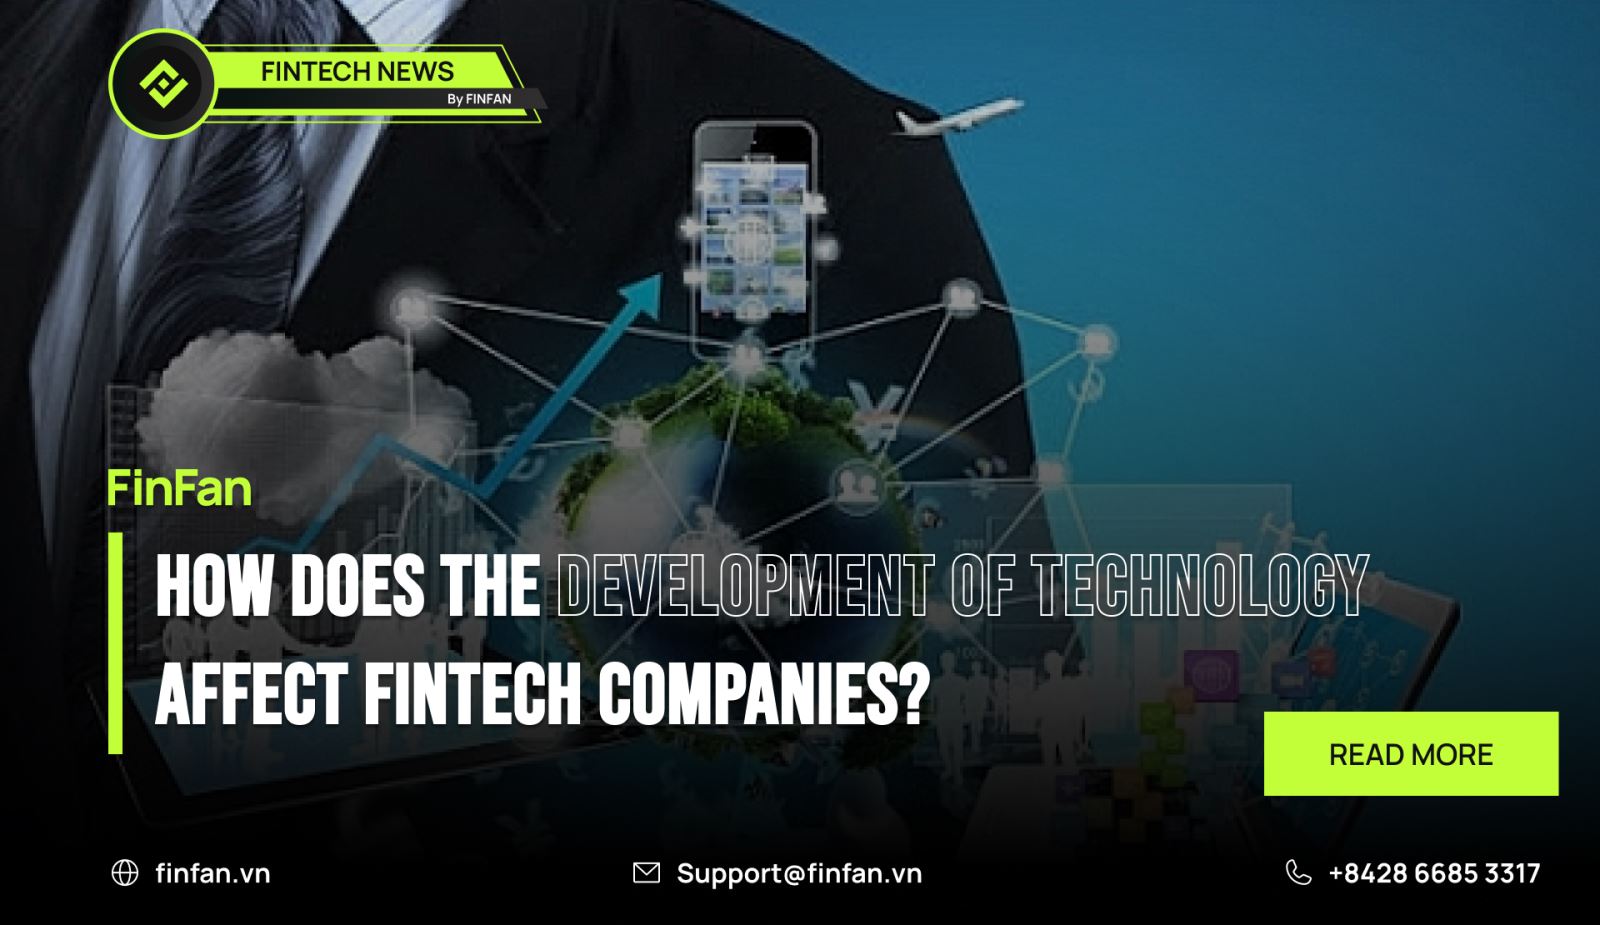 How does the development of technology affect fintech companies?